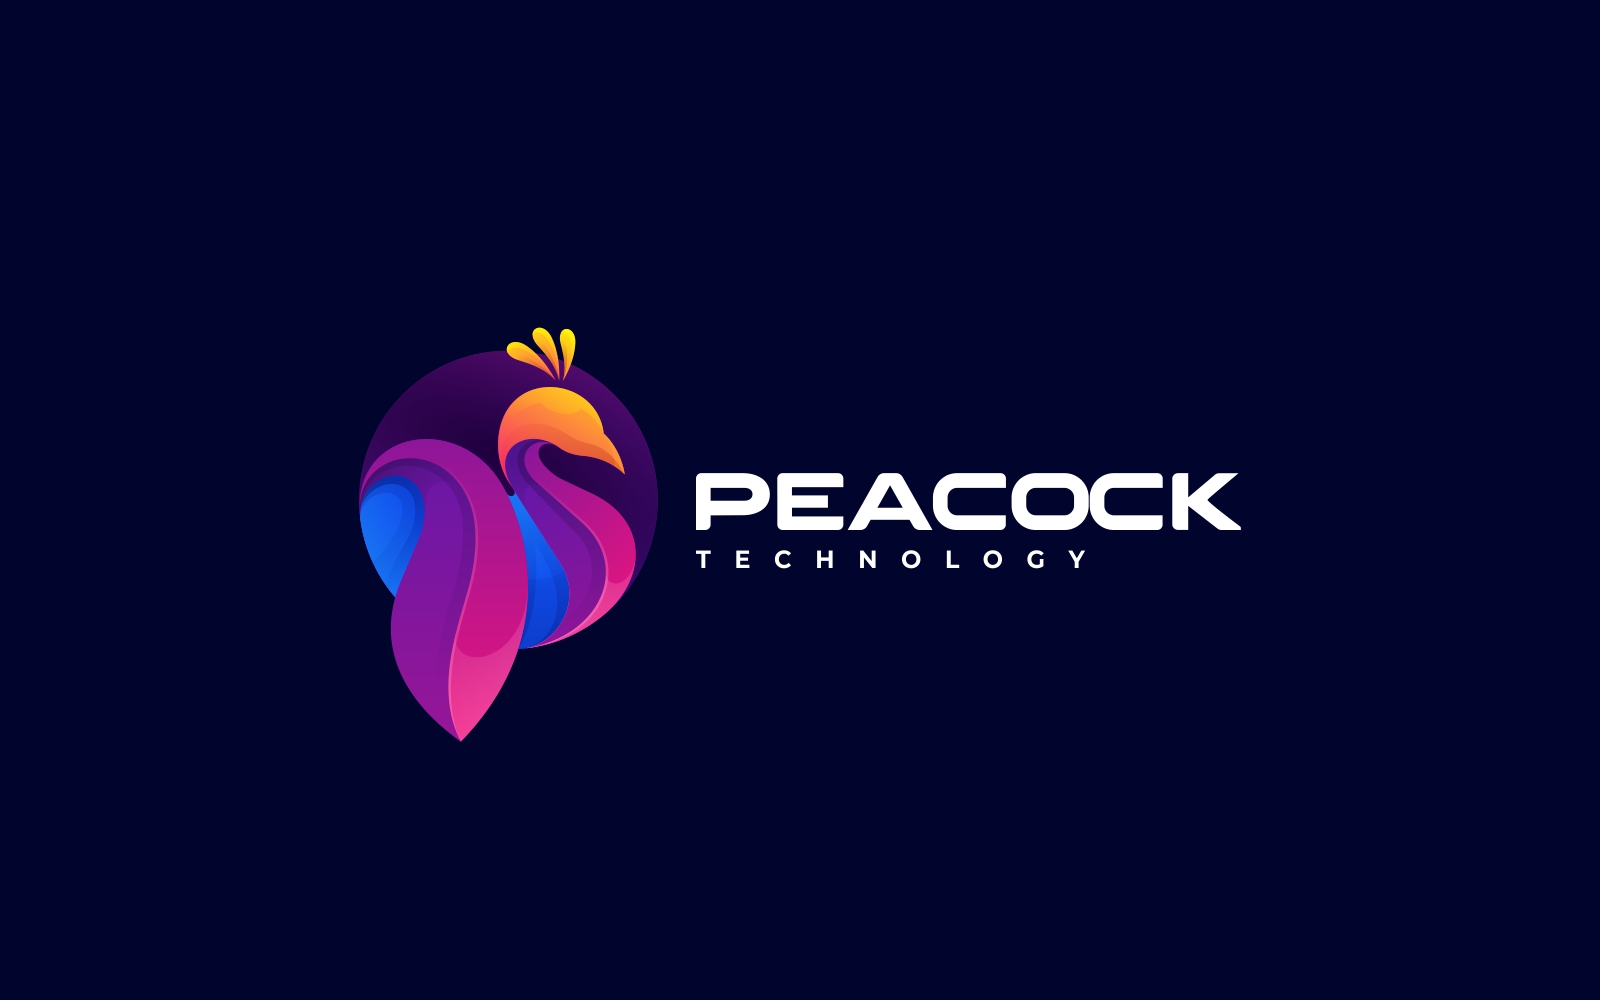 Peacock Colorful Logo Design